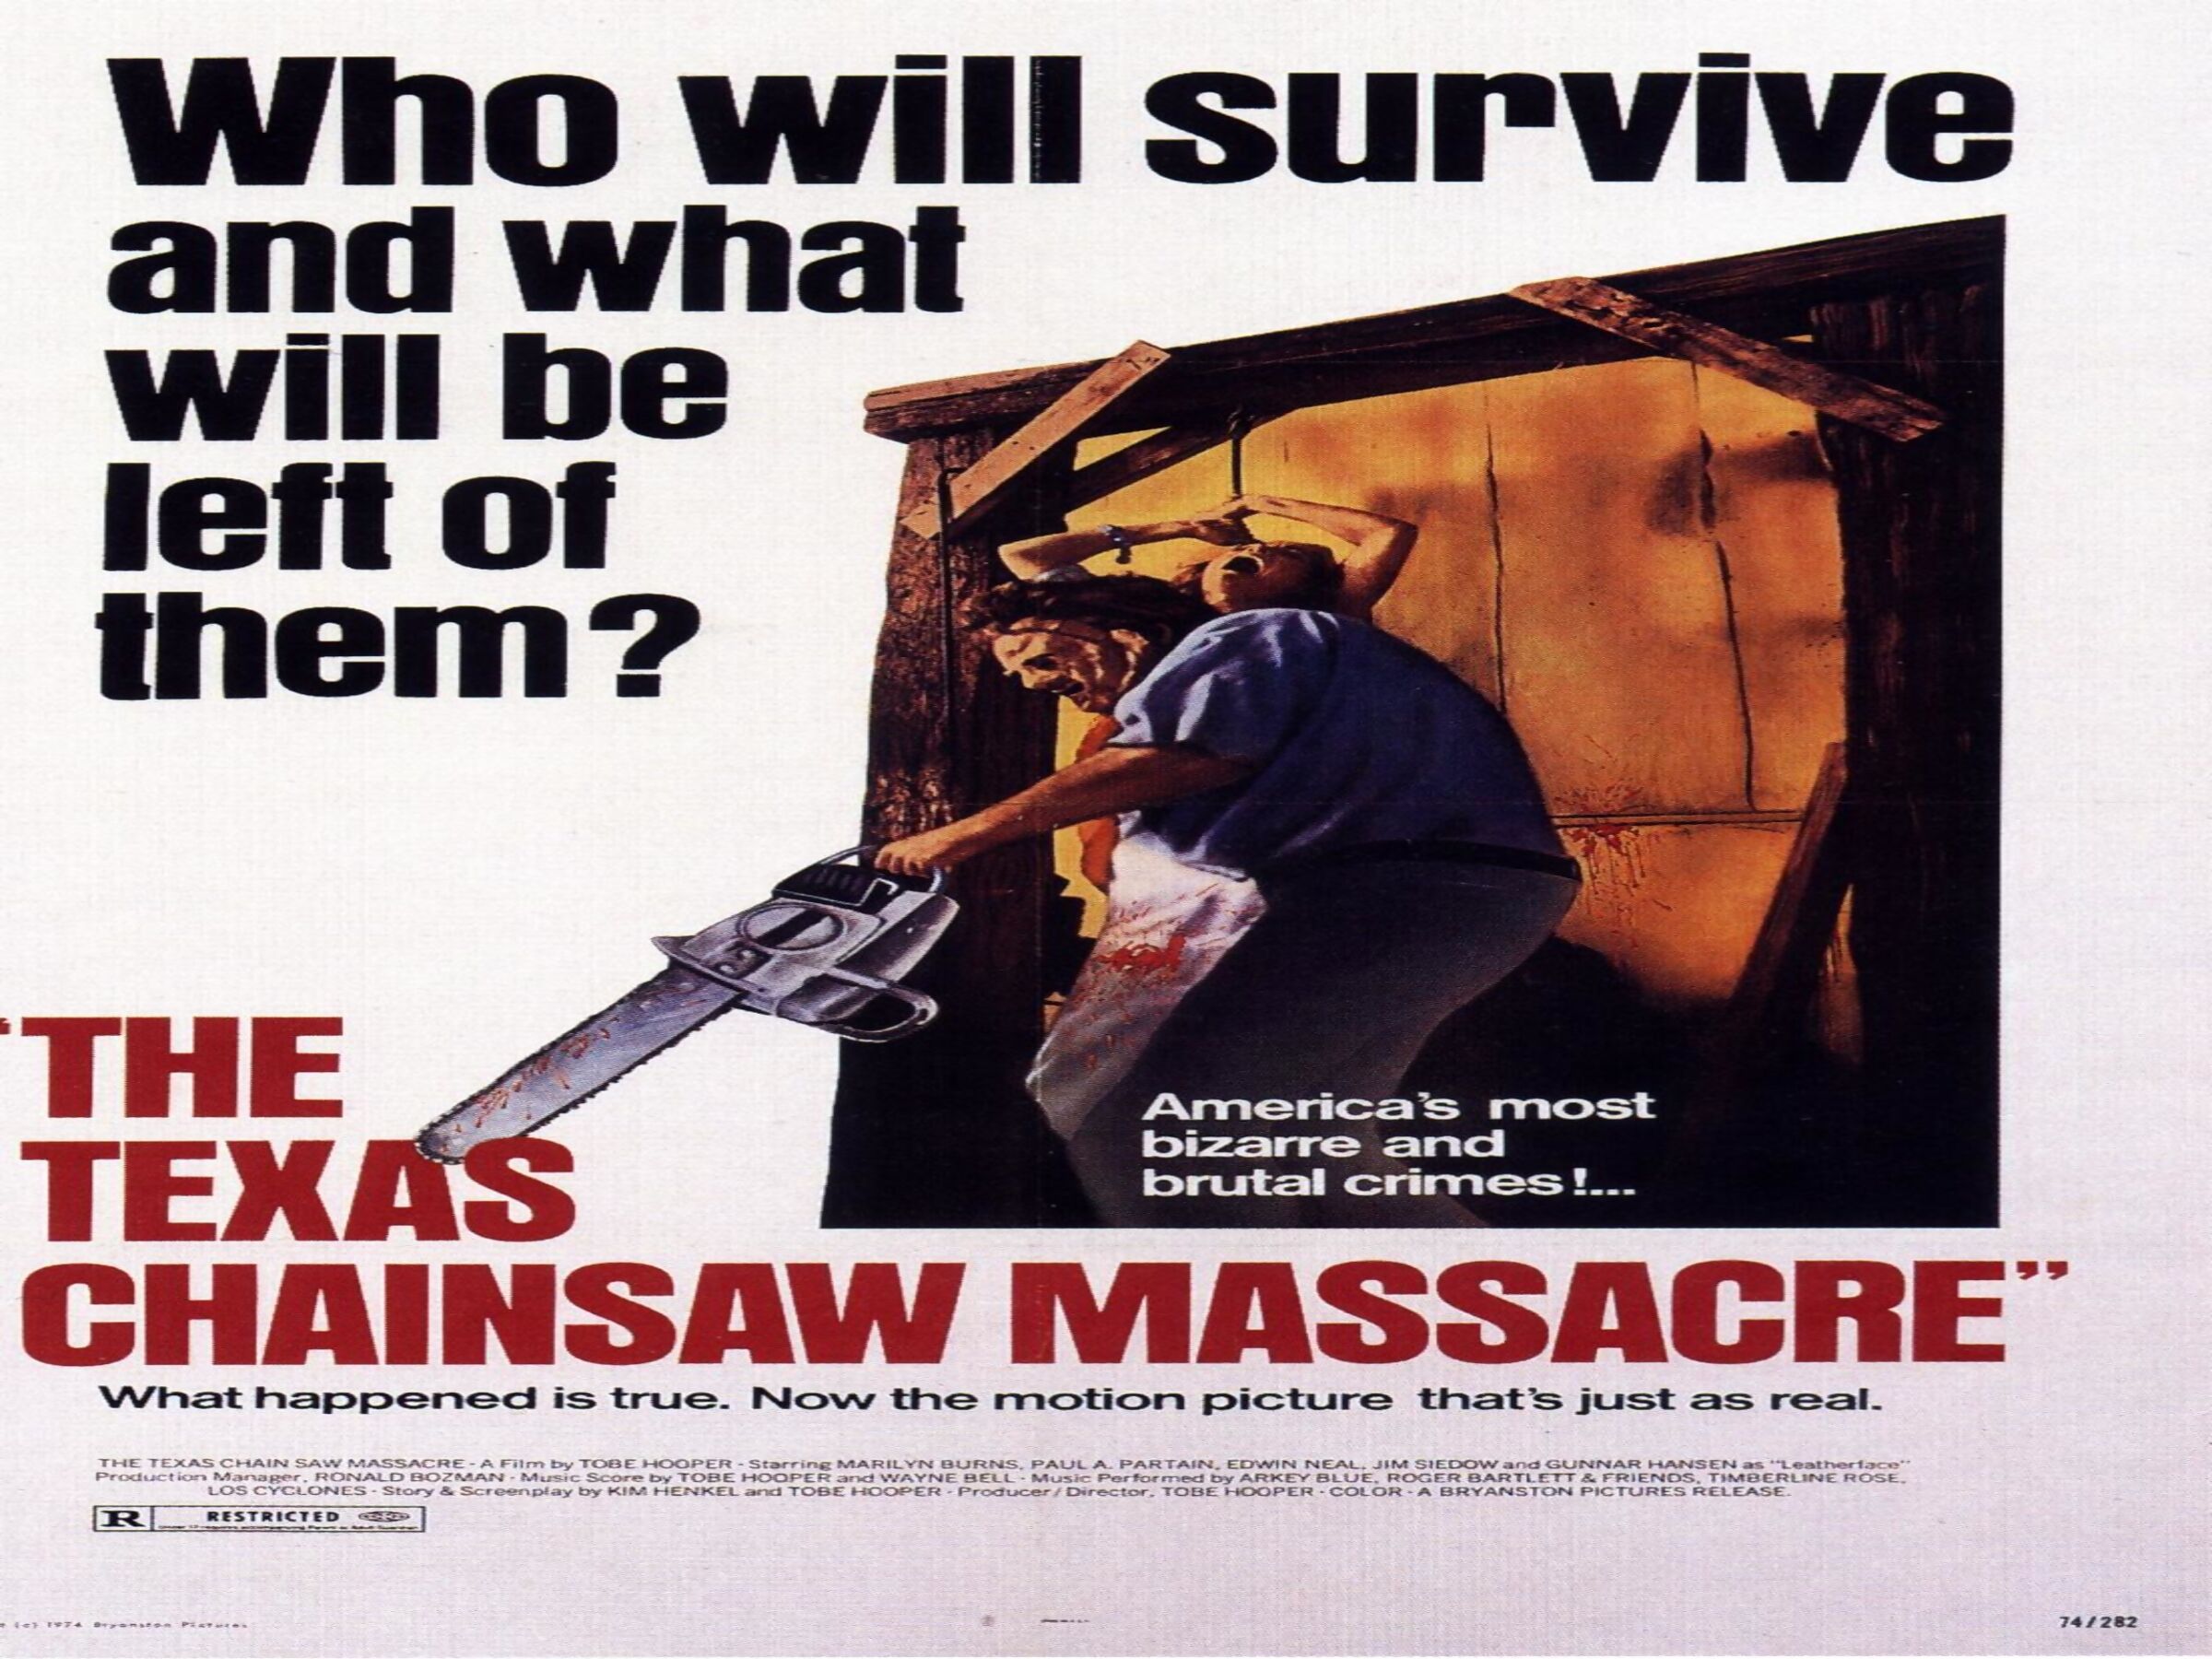 The Return of the Texas Chainsaw Massacre - Wikipedia